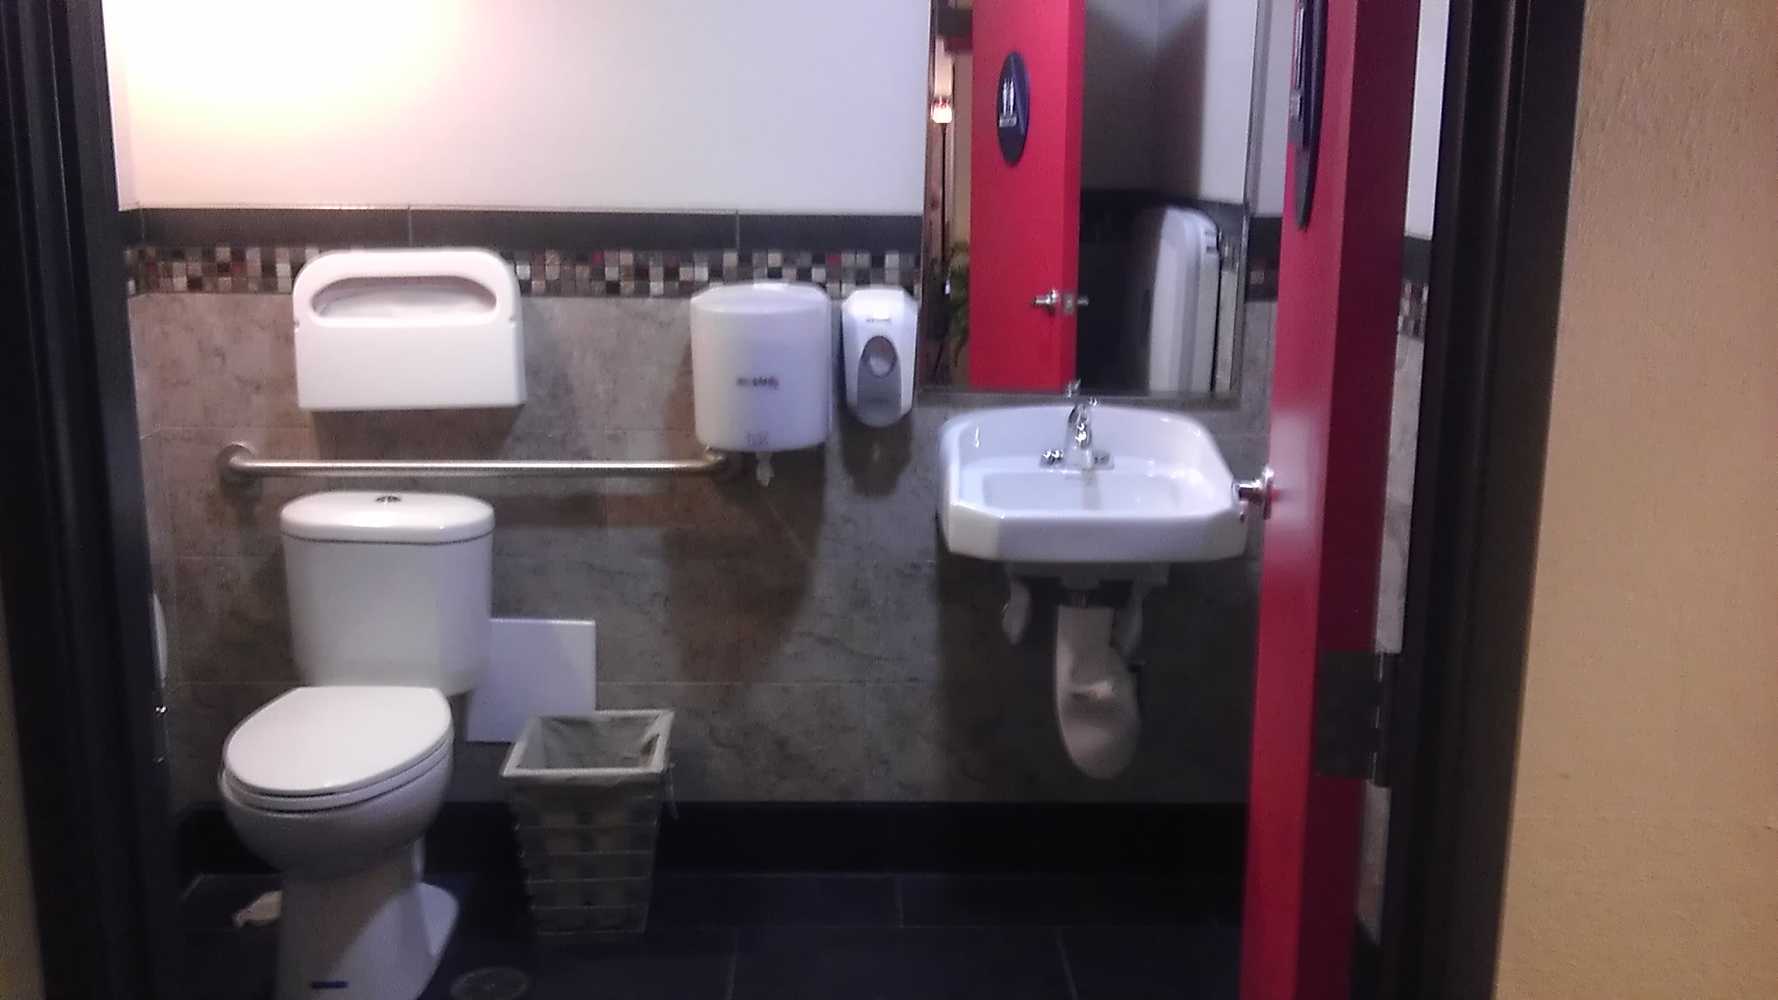 Restaurant Bathroom Remodel